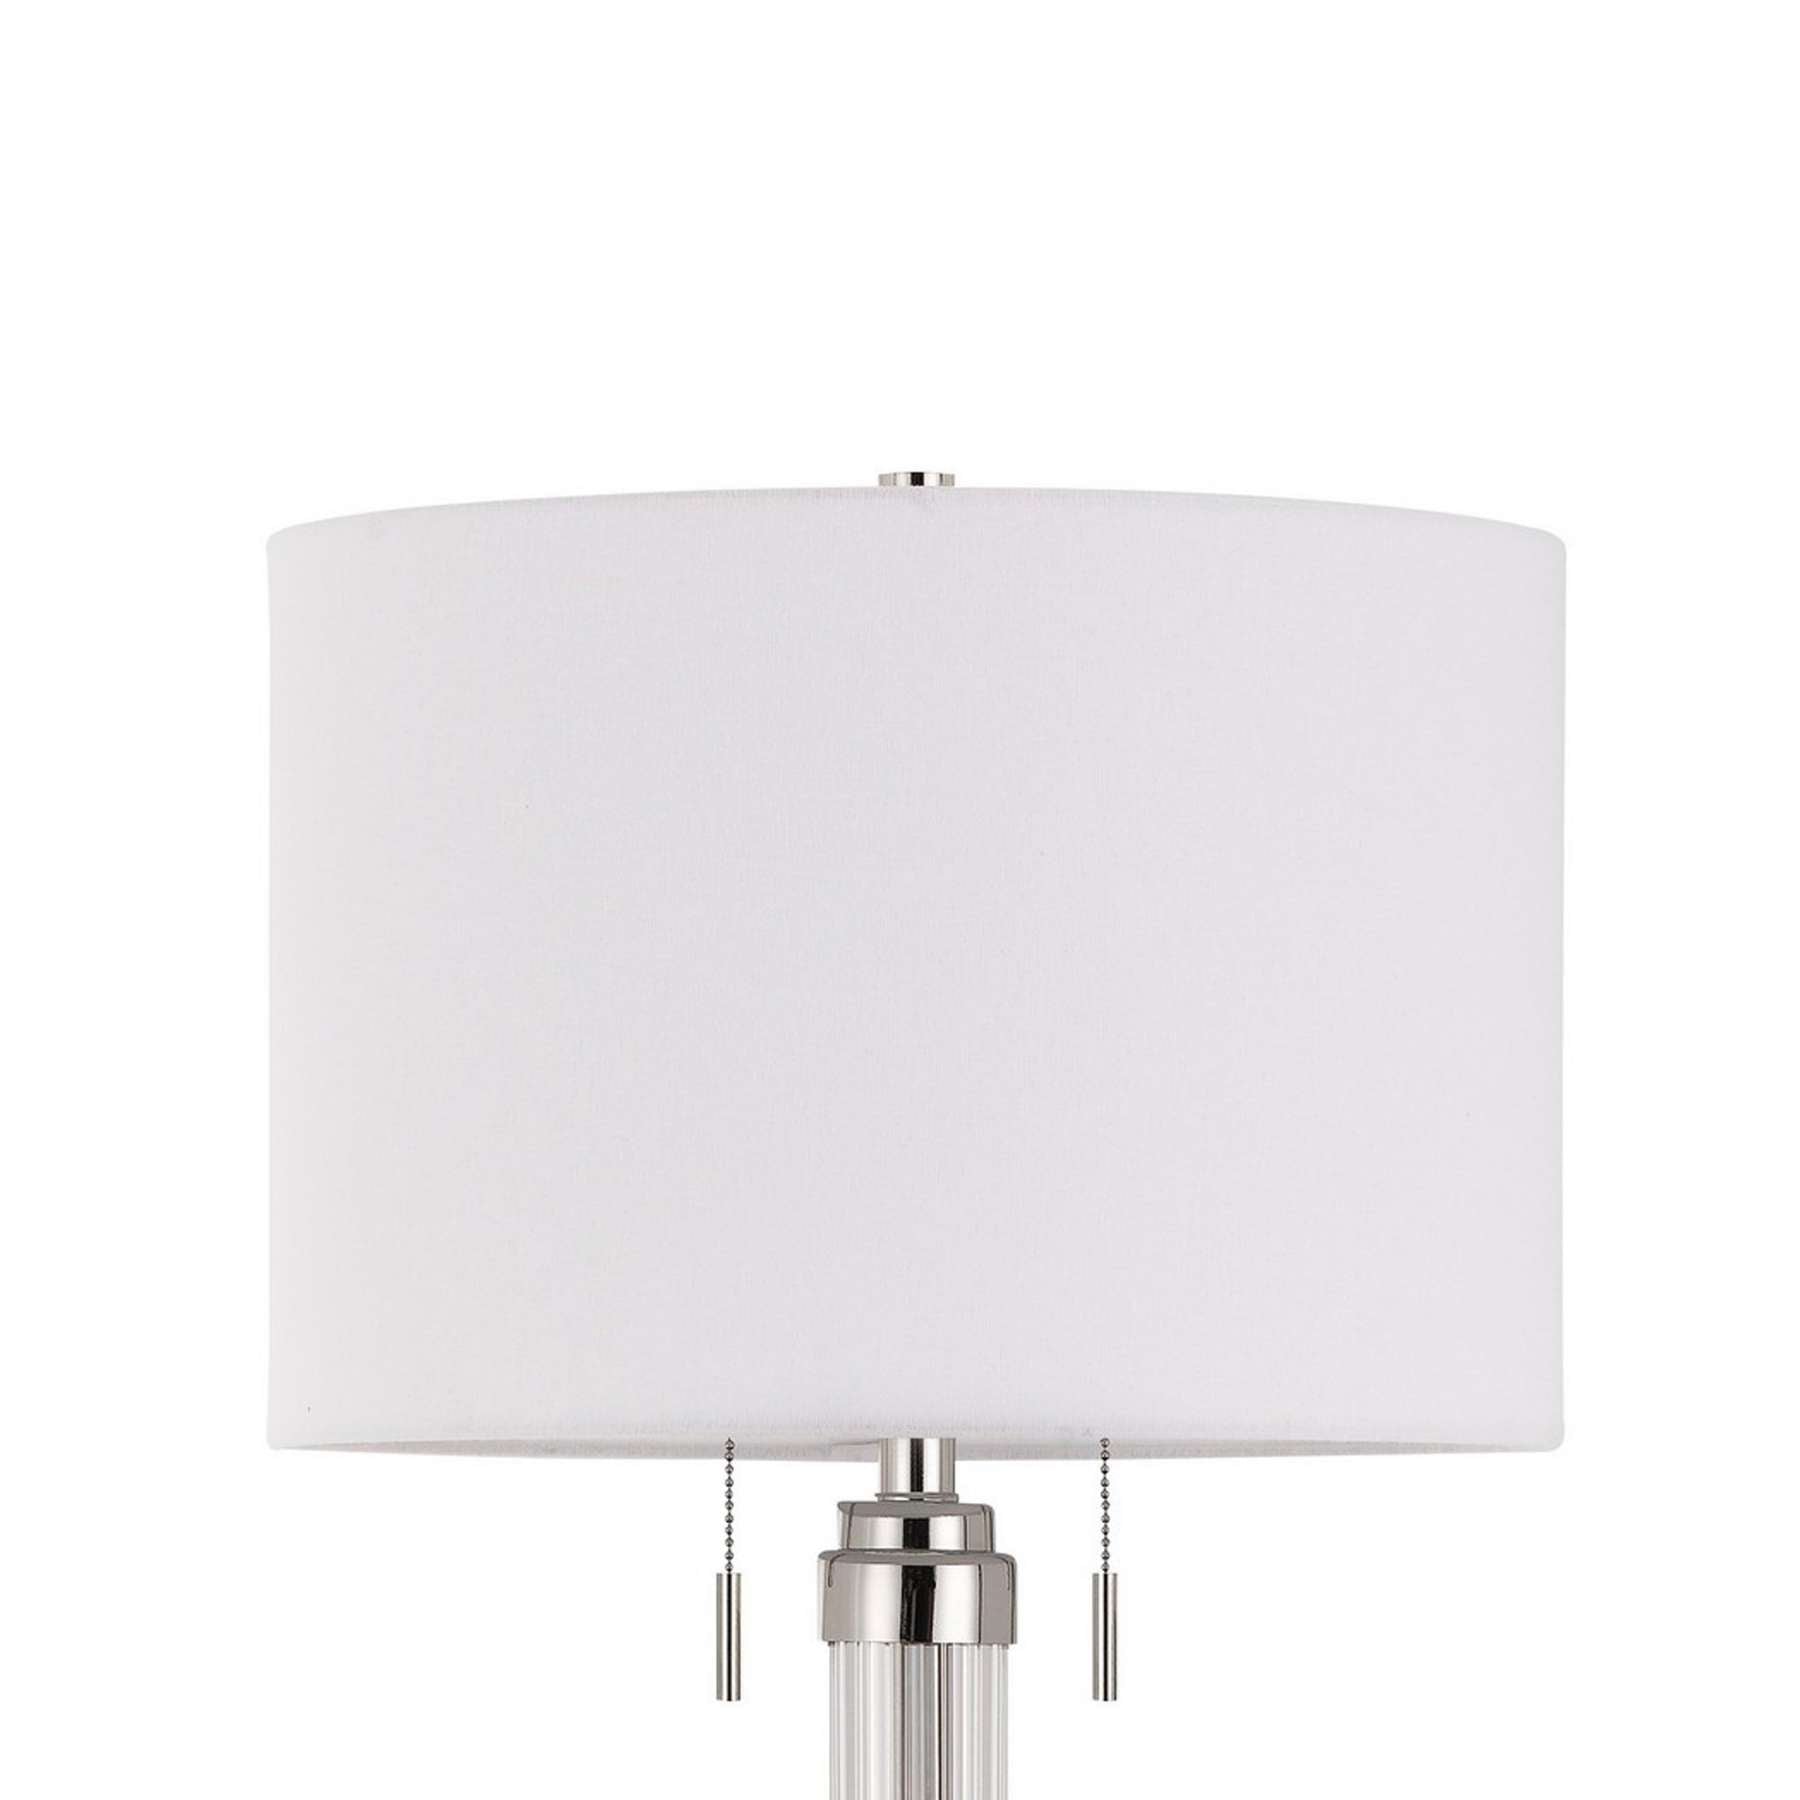 Benzara Metal And Acrylic Tubular Body Floor Lamp With Fabric Drum Shade, White By Benzara Floor Lamps BM224988